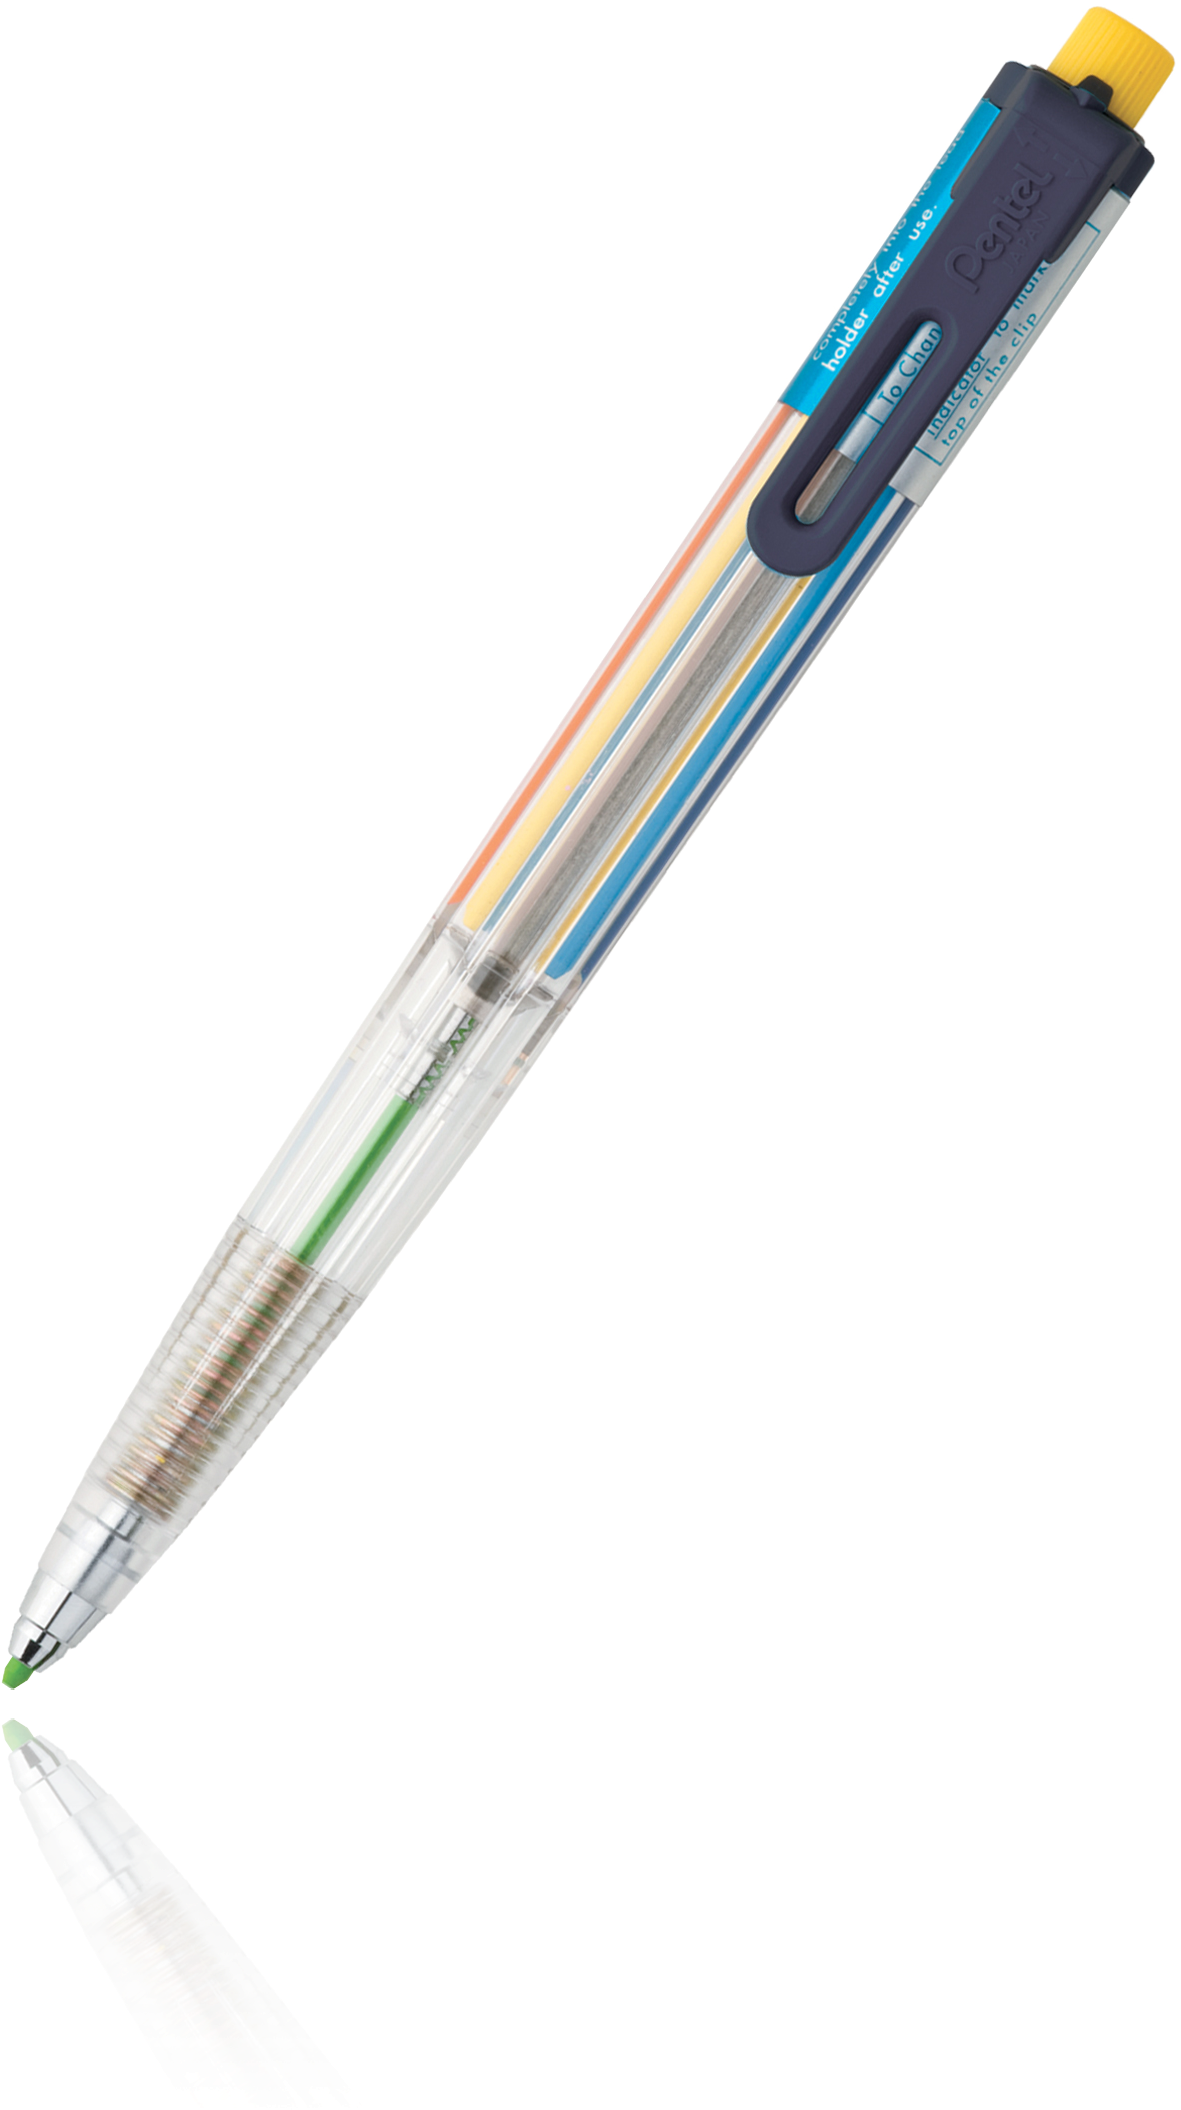 8-colour Pencil - Creativity (1919x2560)